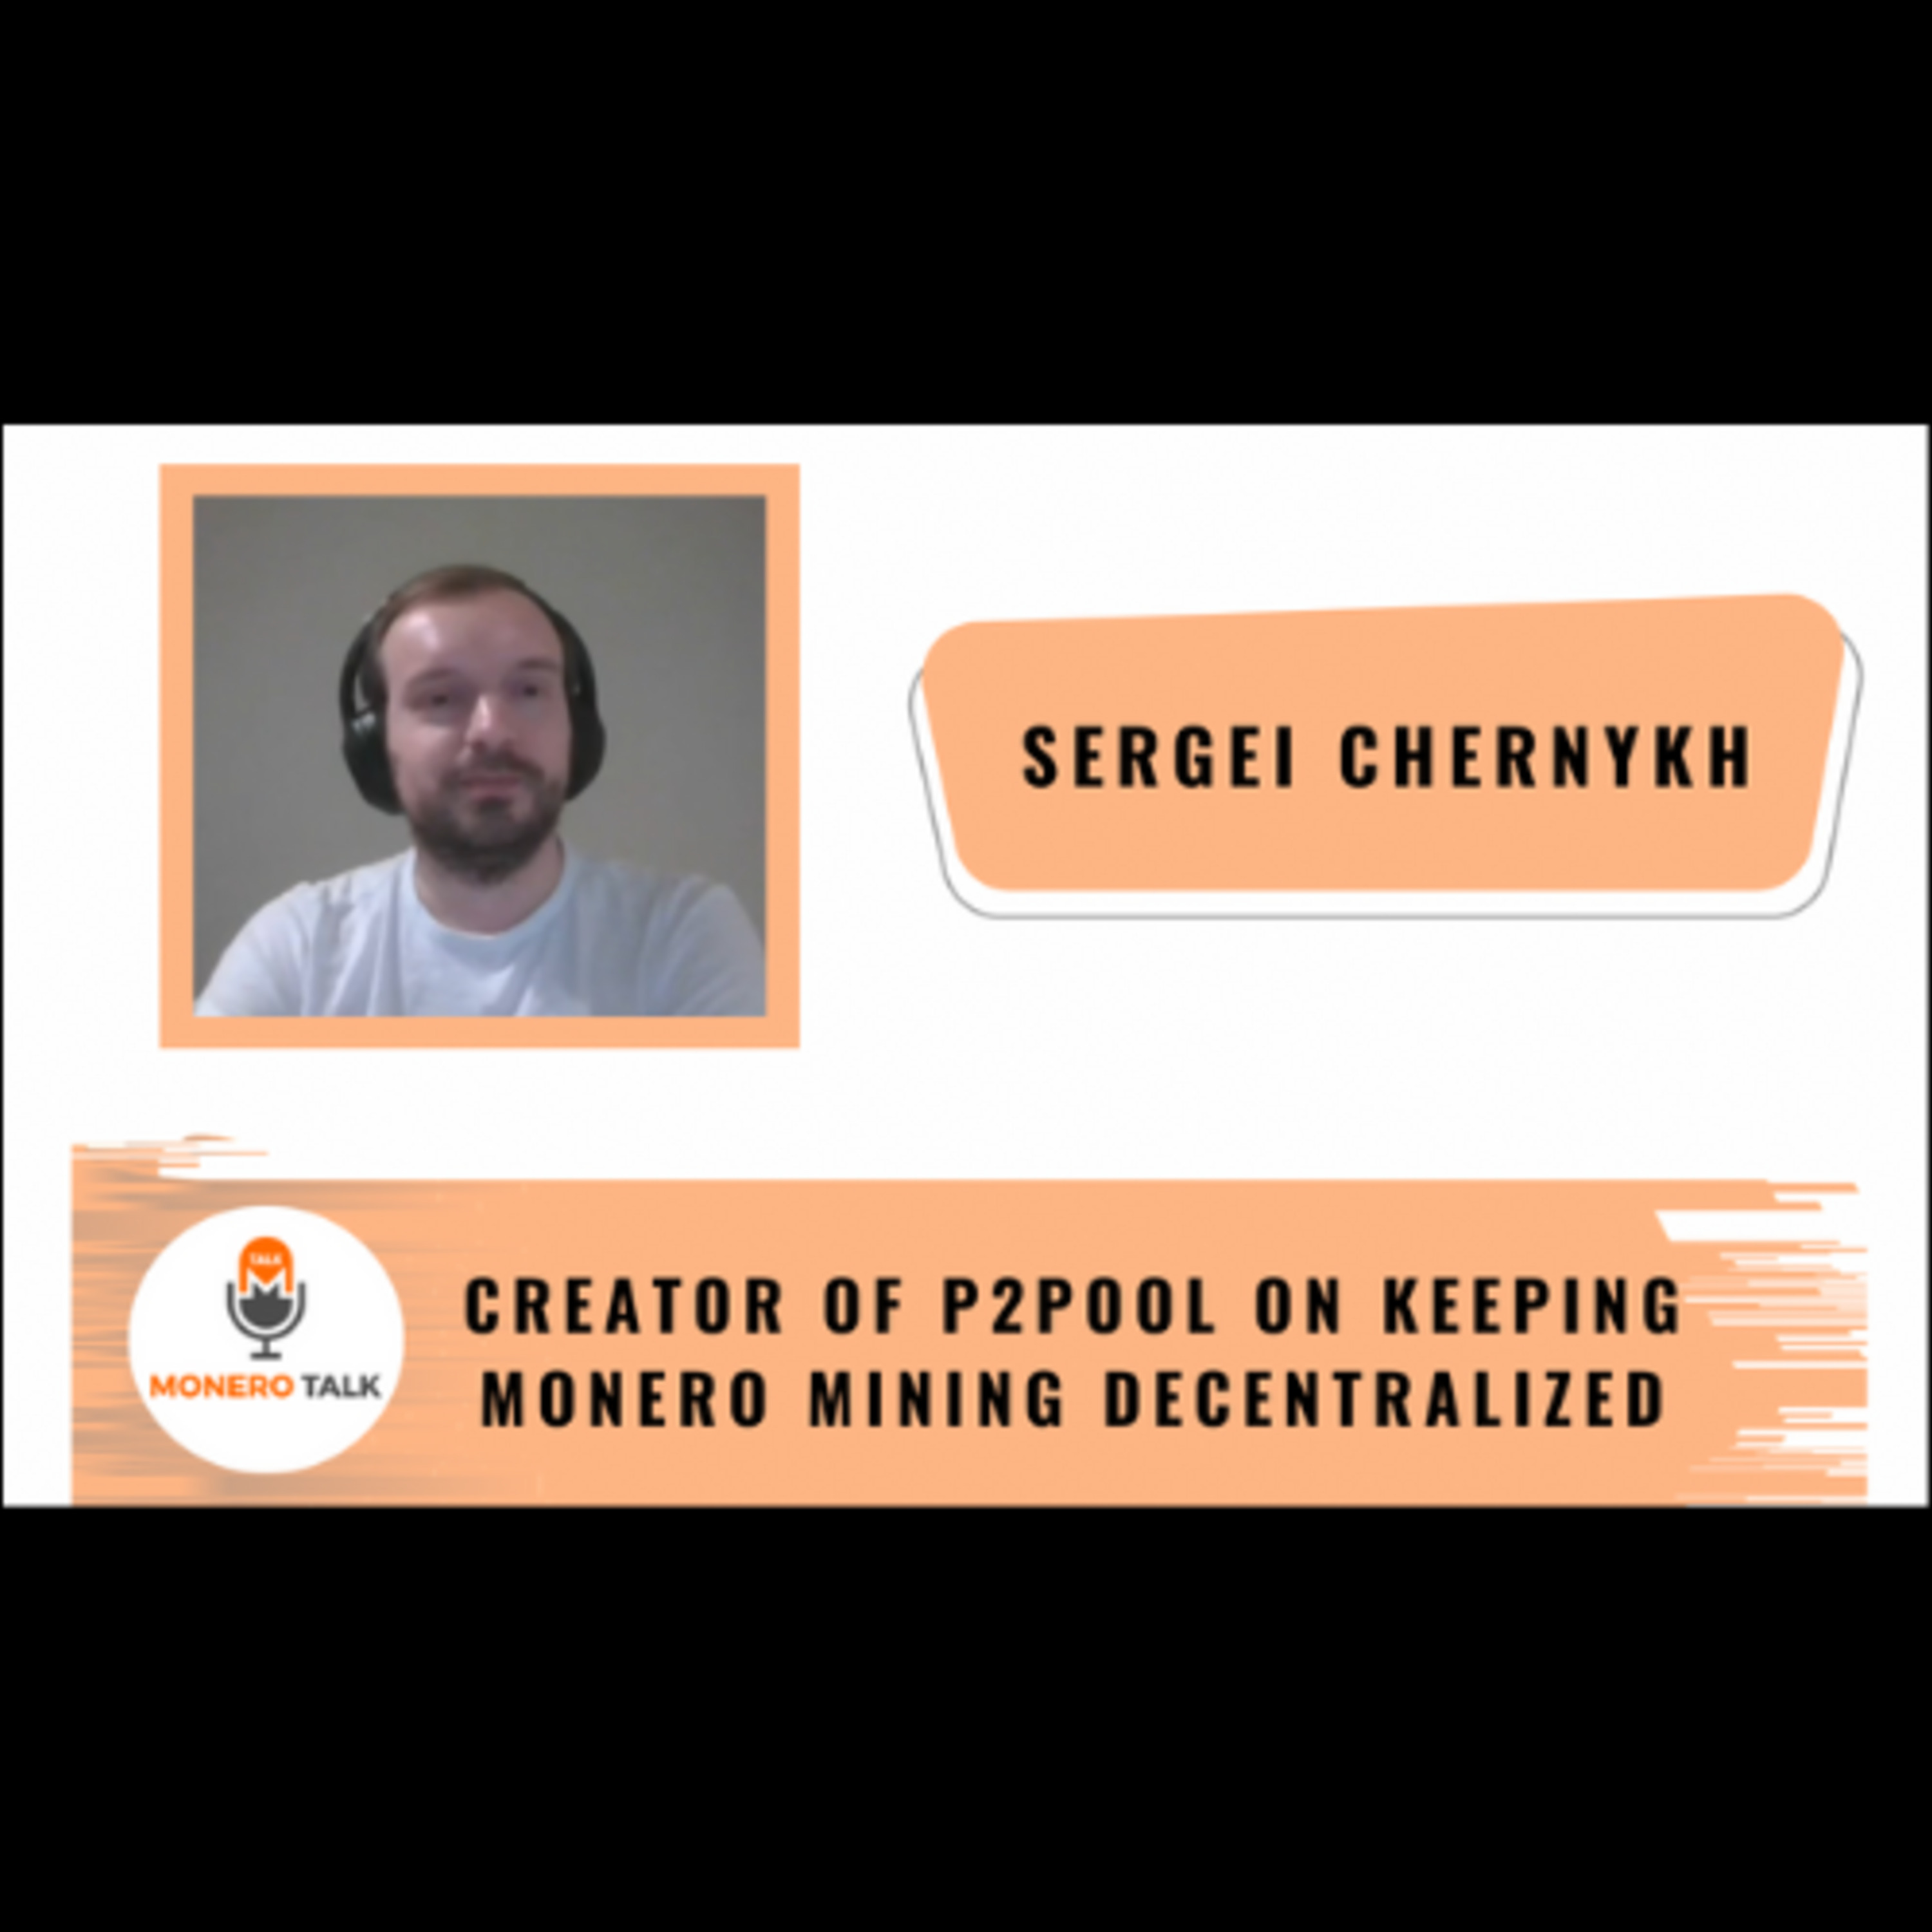 Creator of P2Pool Sergei Chernykh on keeping Monero Mining Decentralized